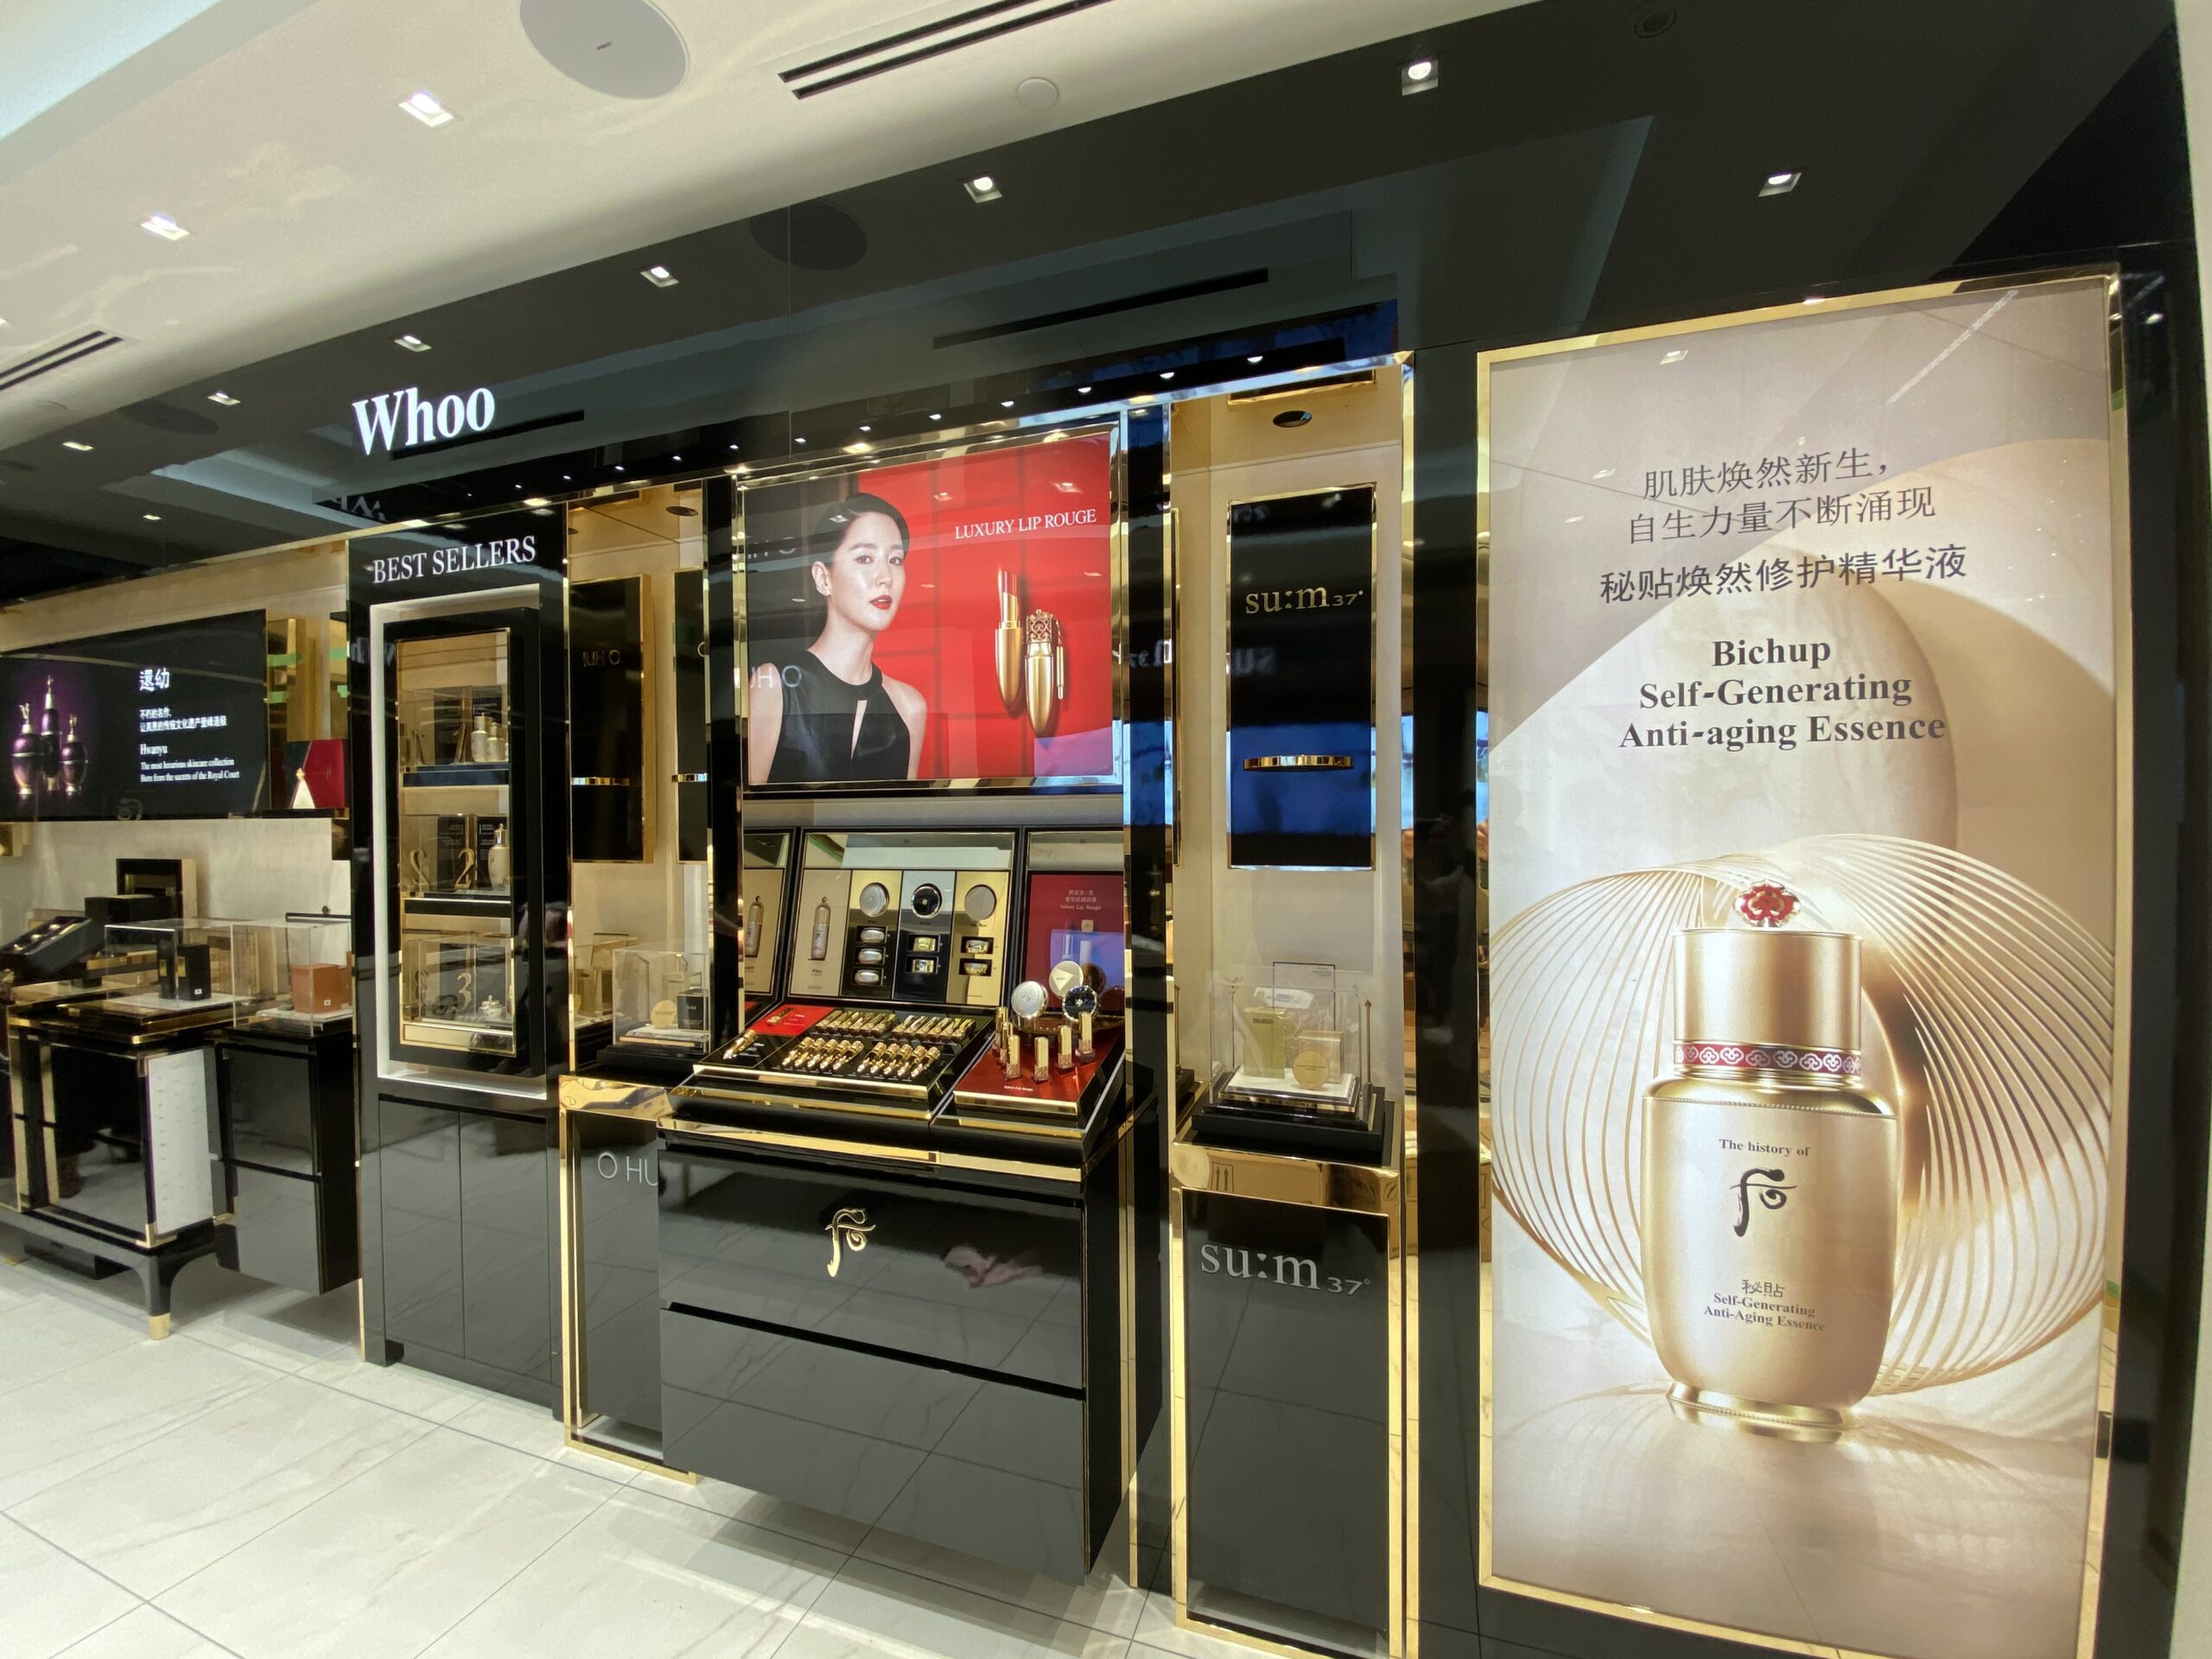 K-Beauty Company Opens World's 1st Multi-Brand Store 'The history